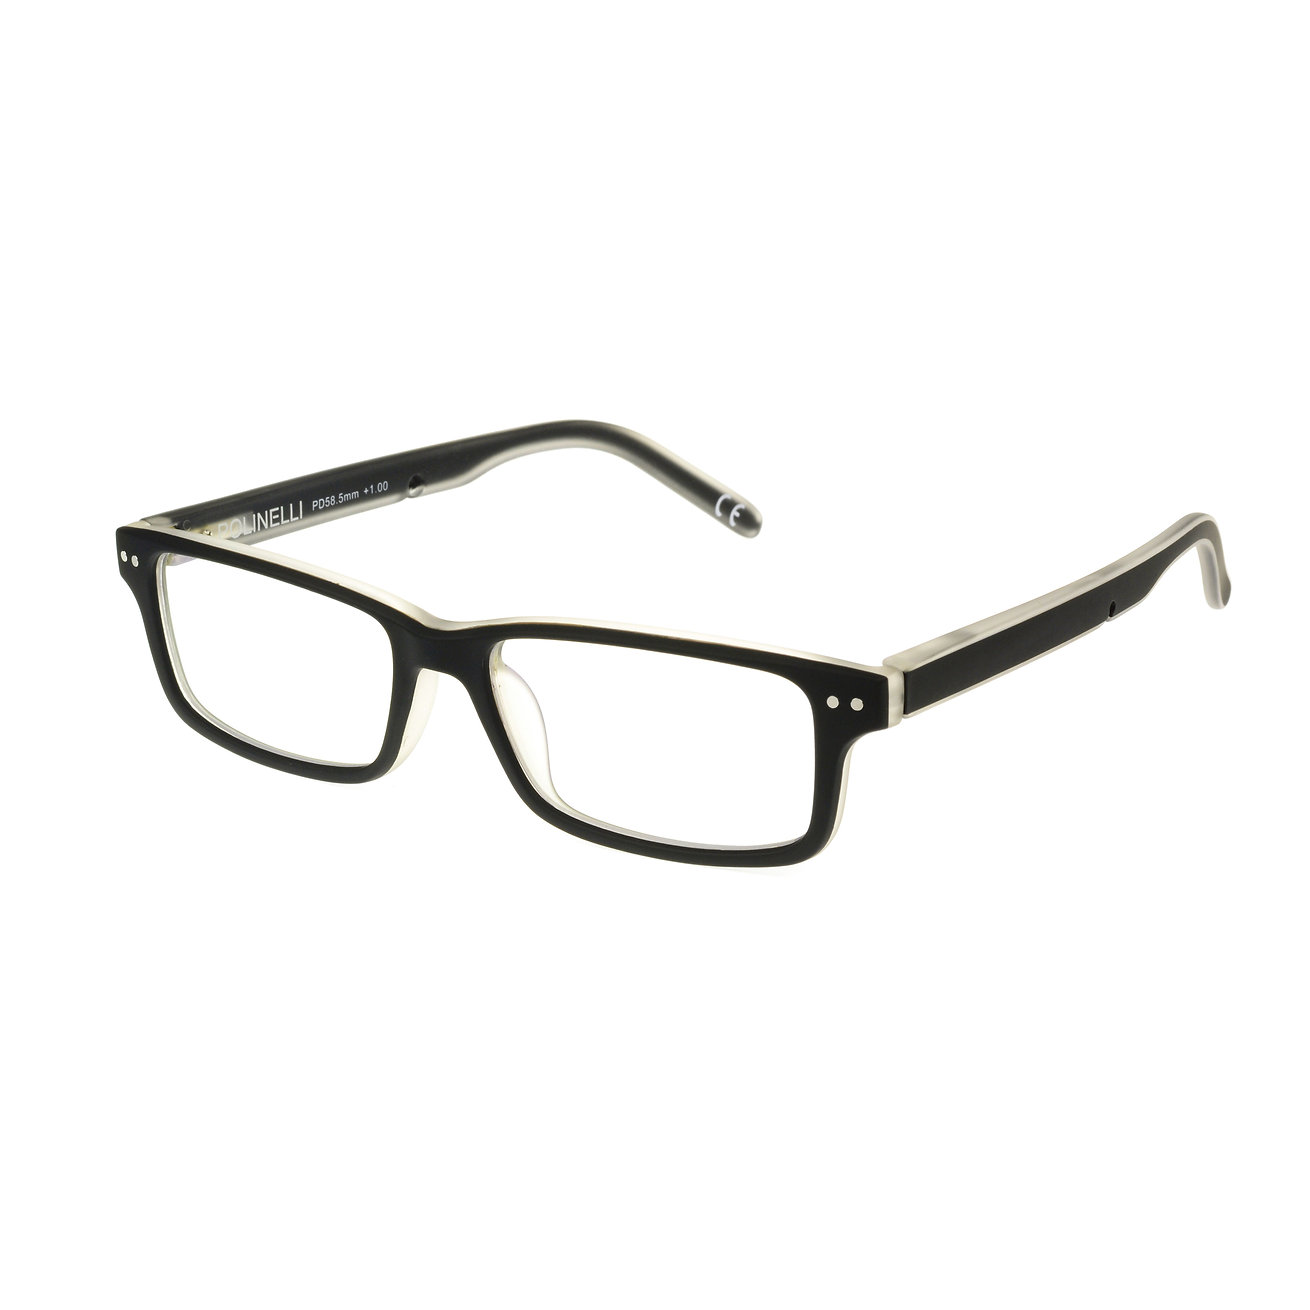 Polinelli eyeglasses model P300 black